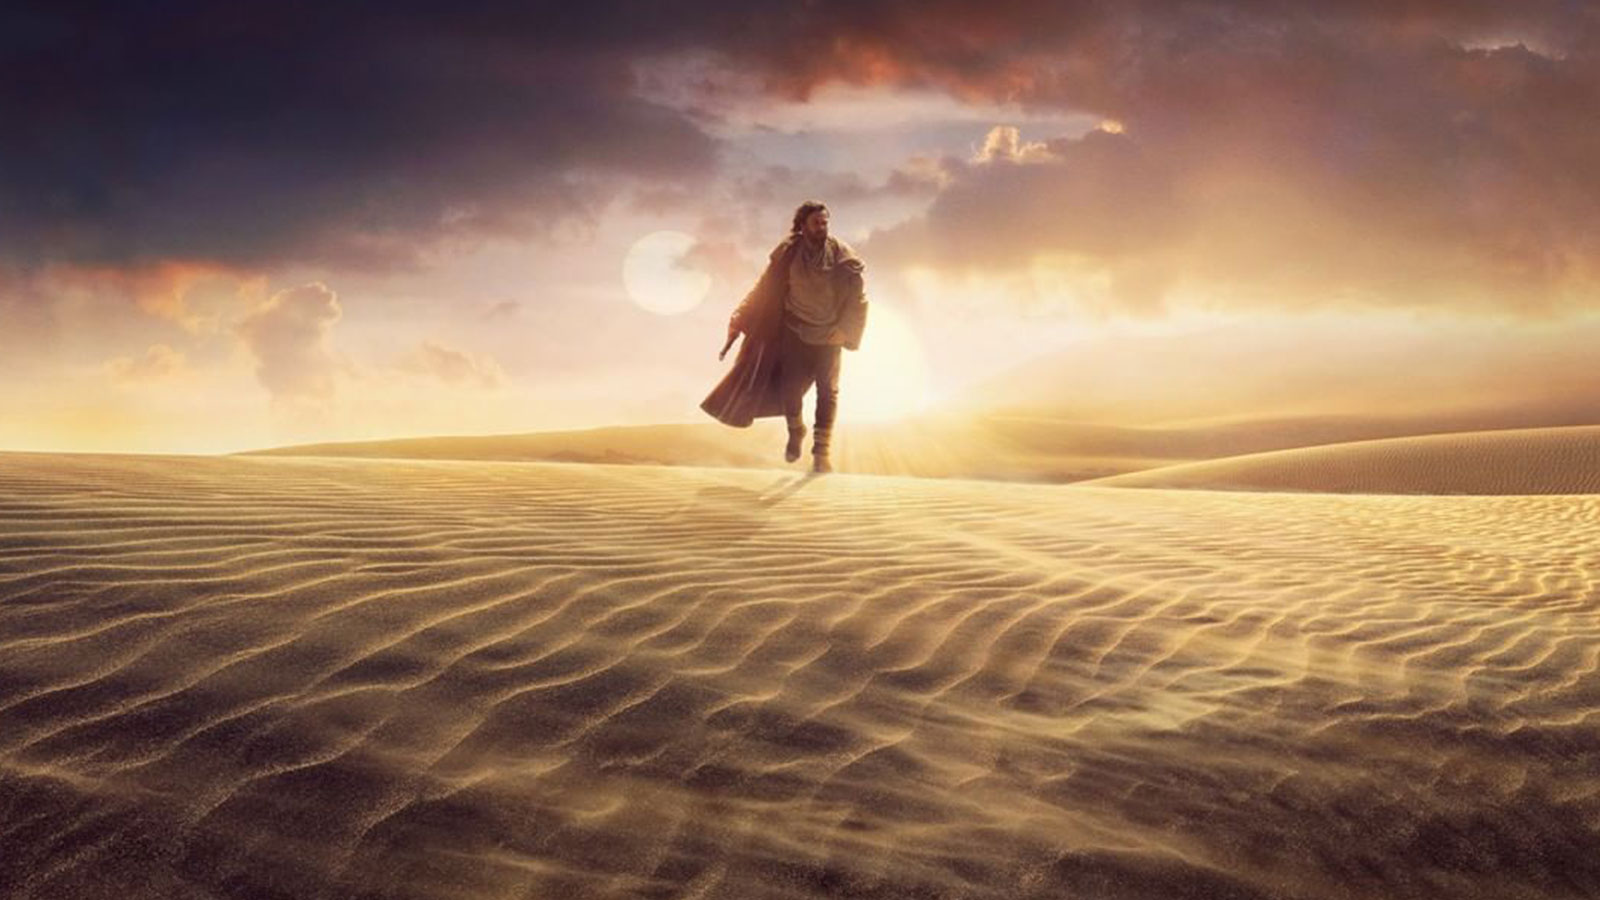 Obi-Wan Kenobi premieres on Disney Plus on May 25th